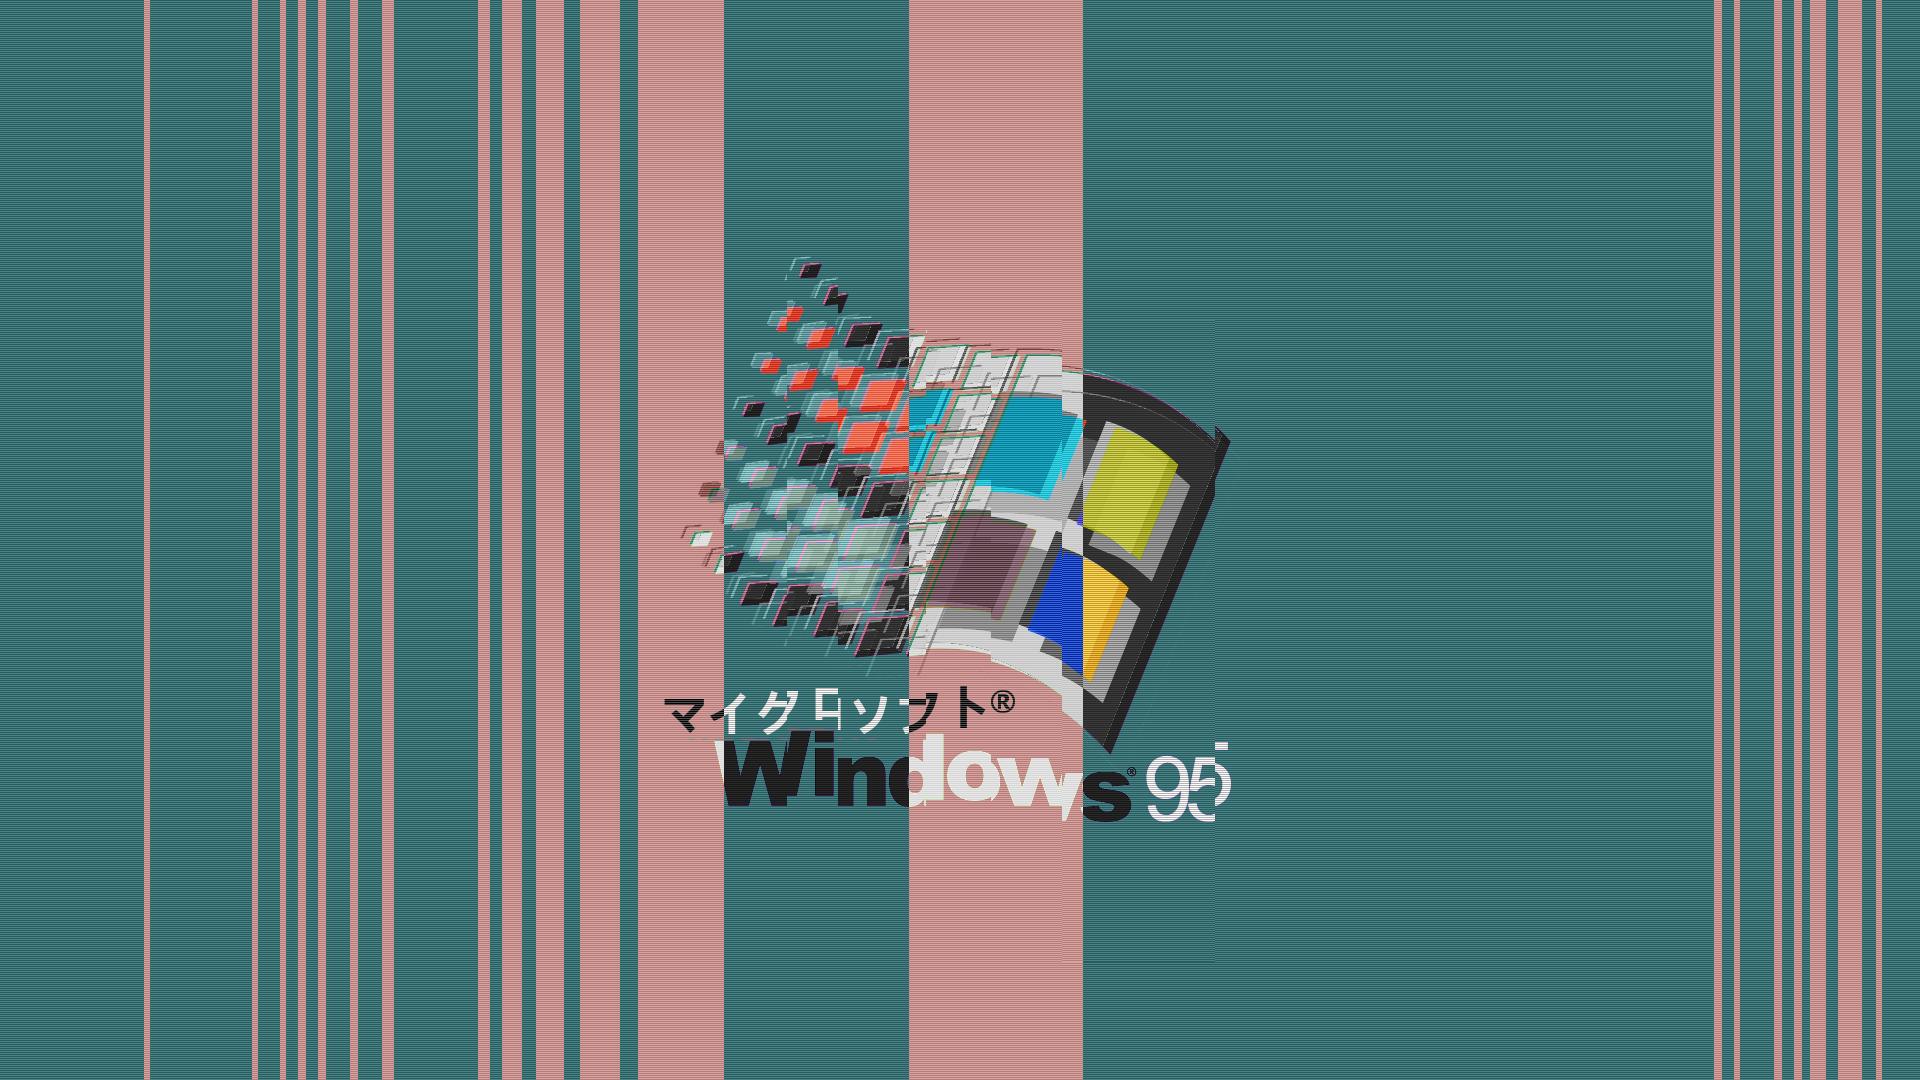 Windows 95 wallpaper 1920x1080